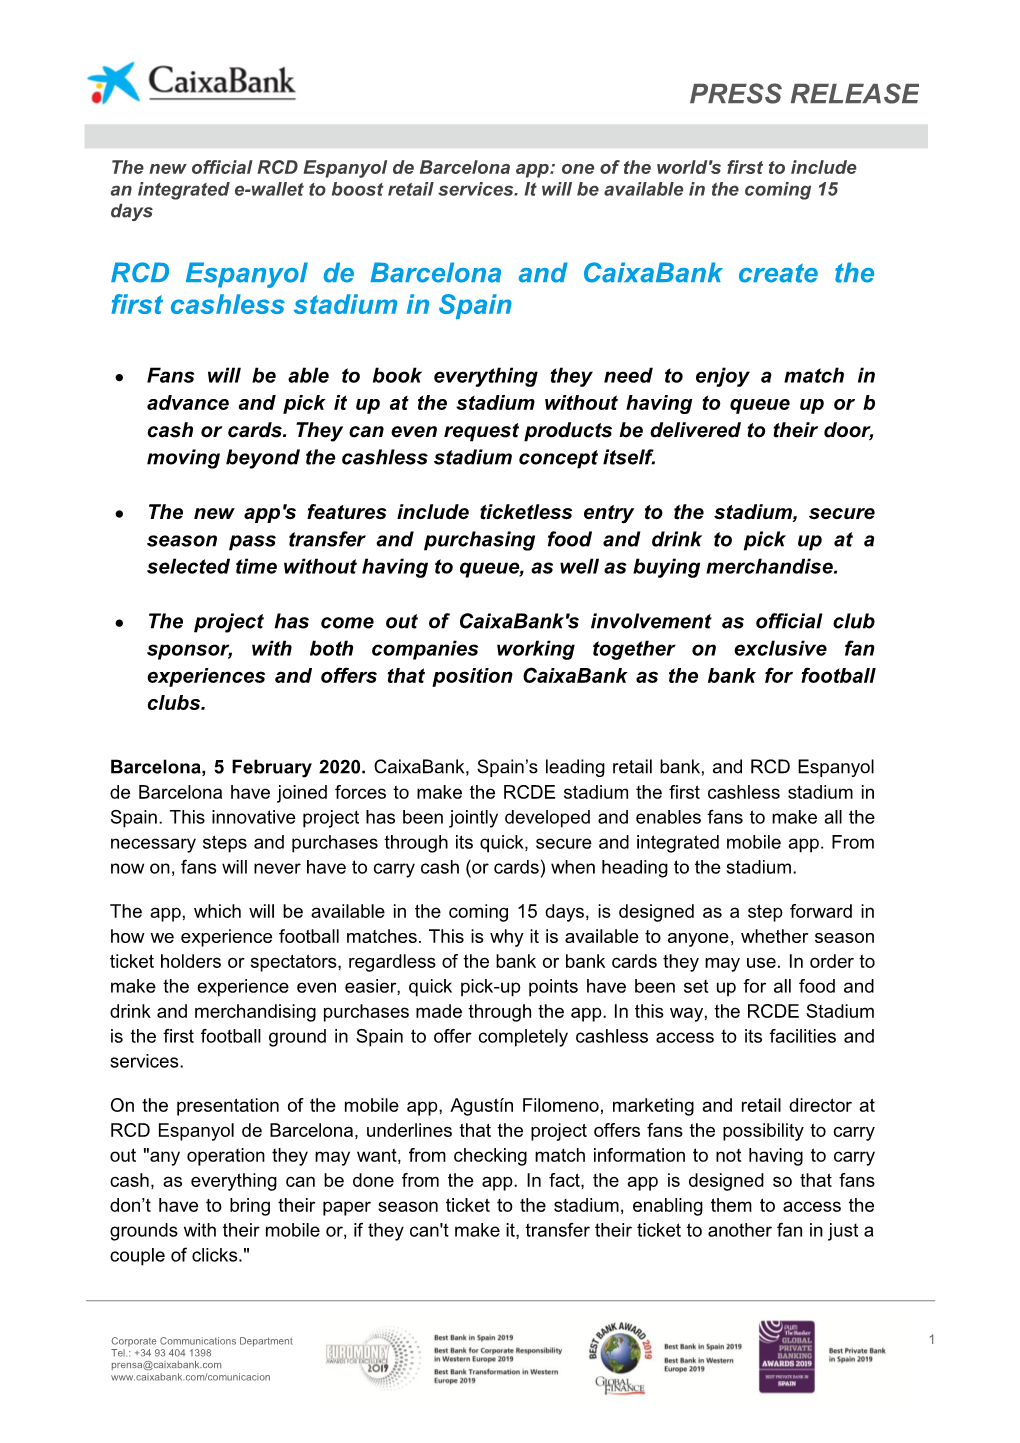 PRESS RELEASE RCD Espanyol De Barcelona and Caixabank Create